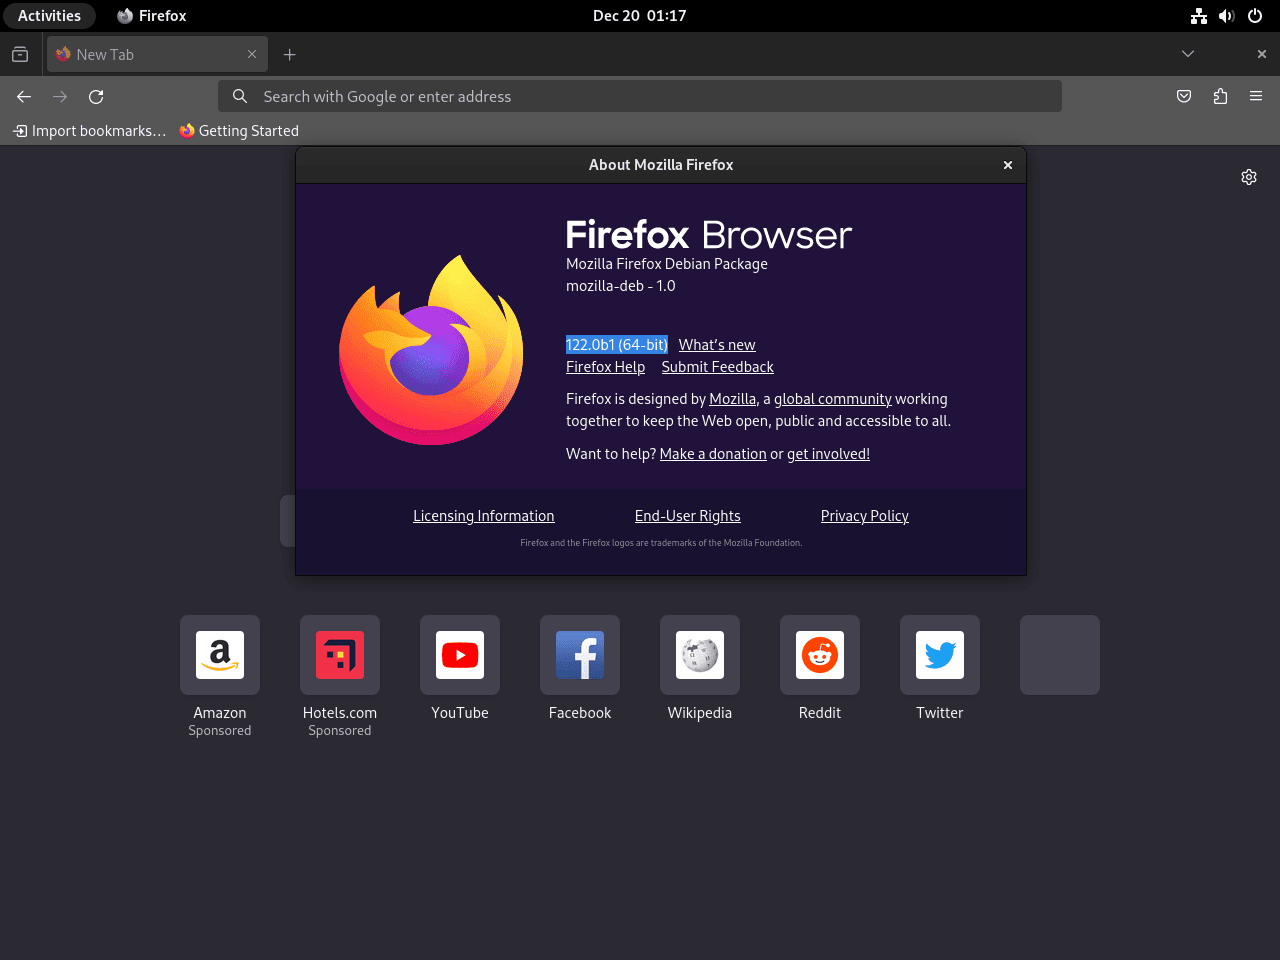 Firefox Beta running on Debian Linux desktop